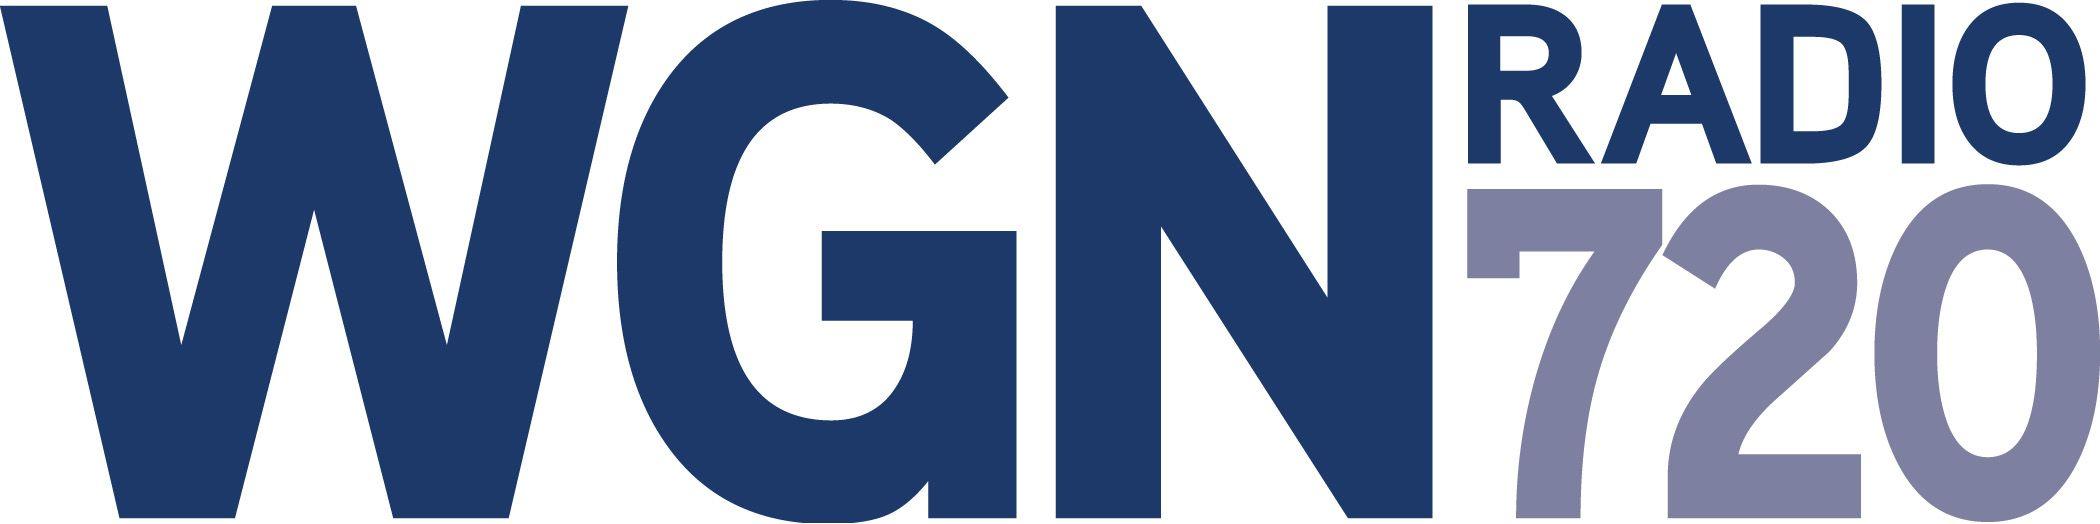 WGN Logo - WGN (AM) | Logopedia | FANDOM powered by Wikia